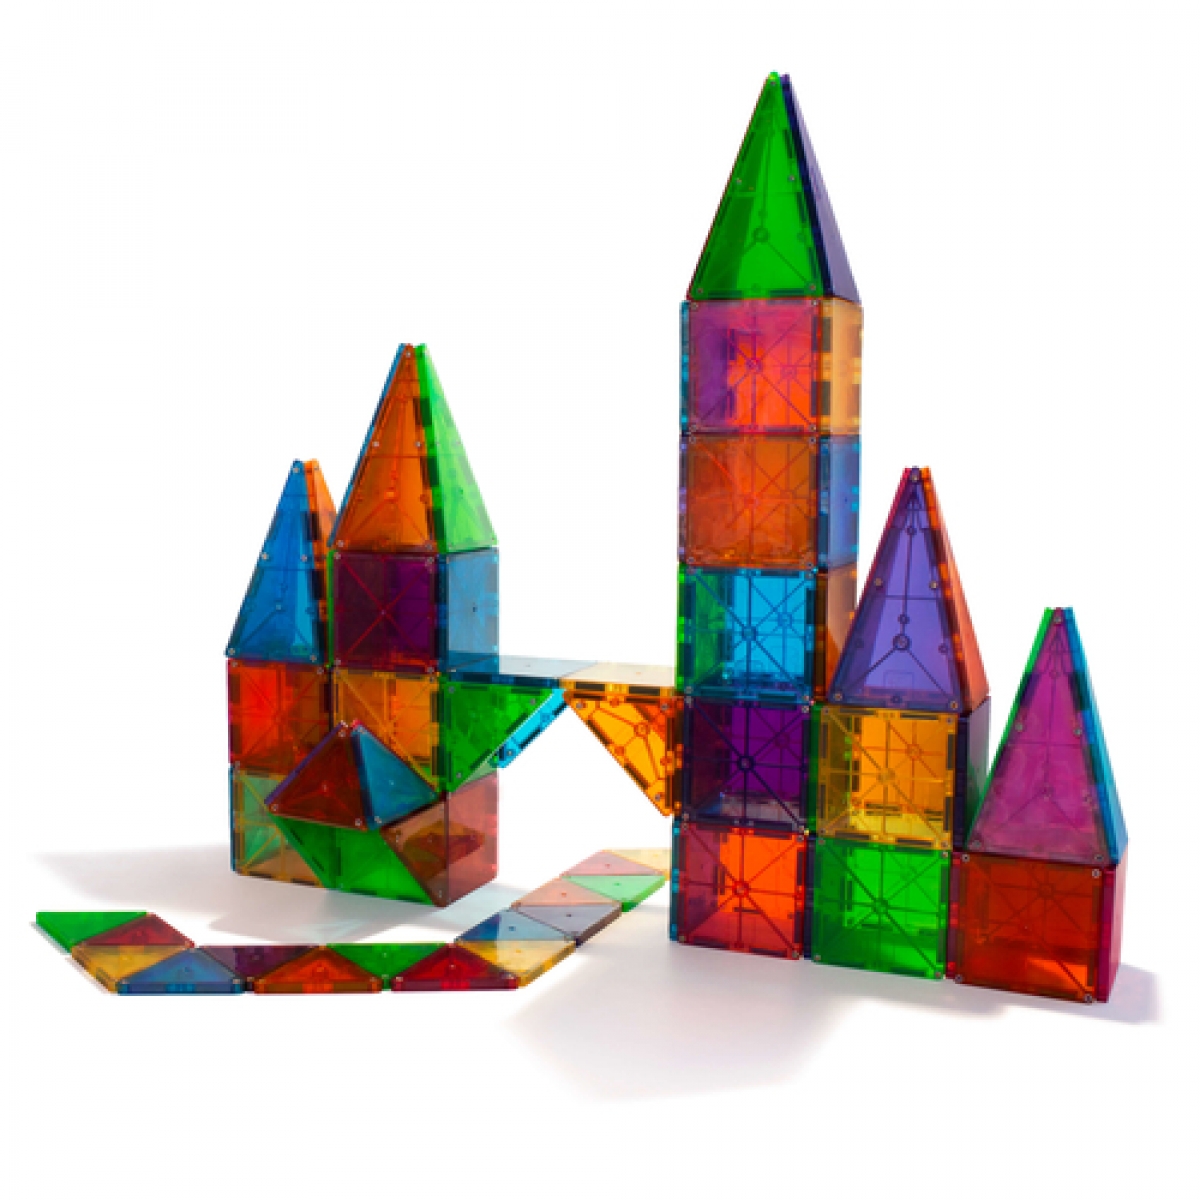 Magna-Tiles® Clear Colors 100-Piece Magnetic Blocks Set - Magna-Tiles®